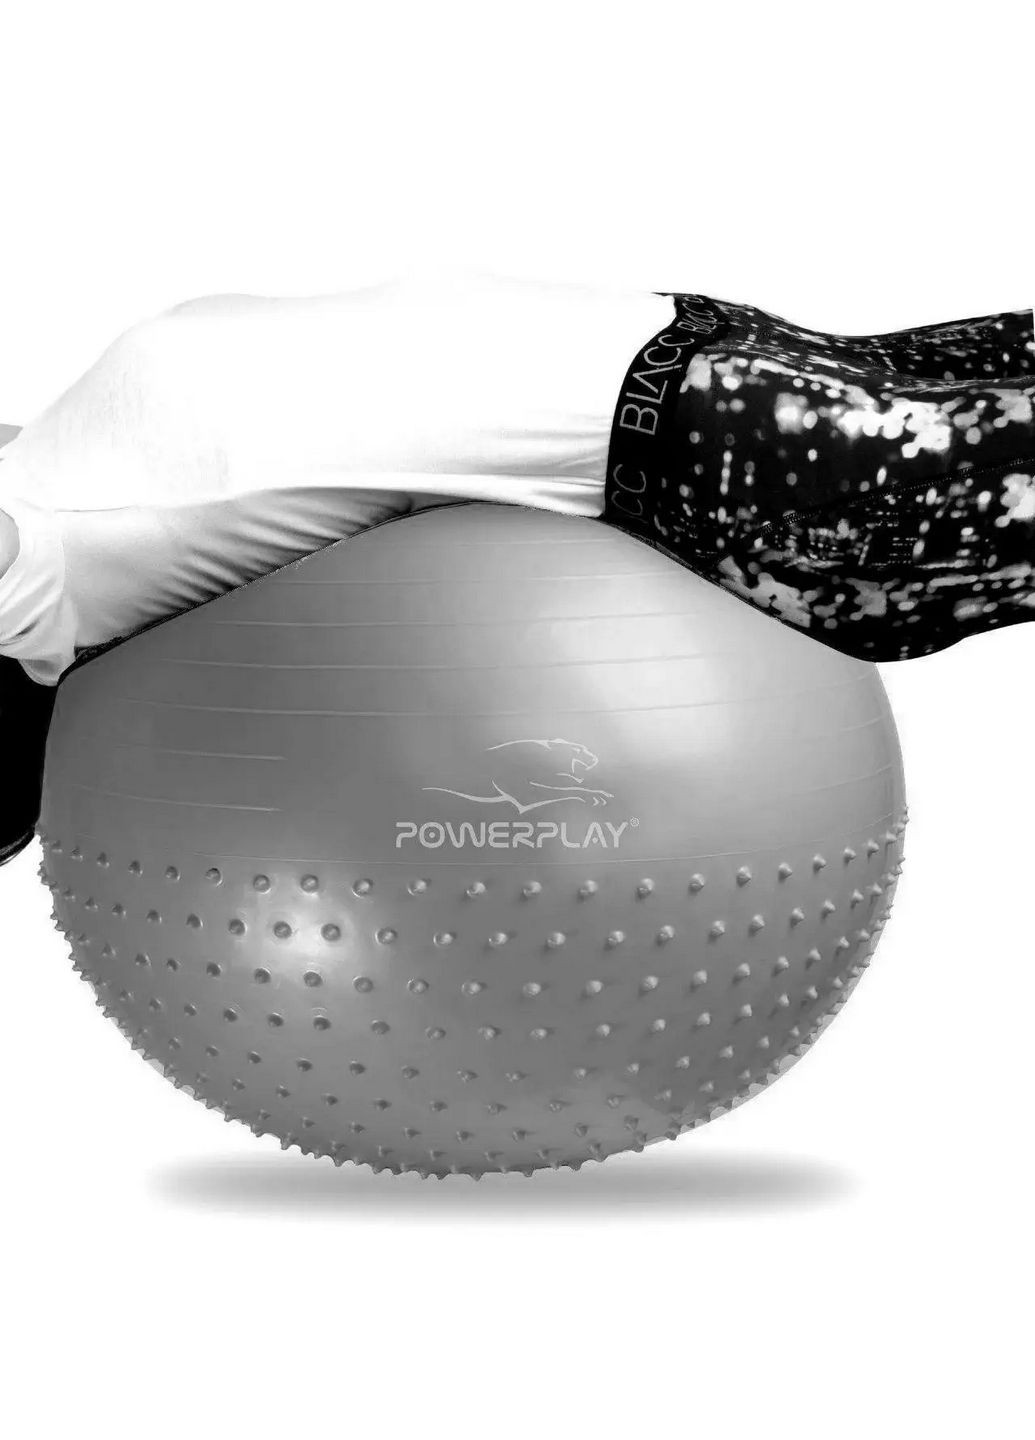 М'яч для фітнесу 4003 із насосом PowerPlay (293420445)